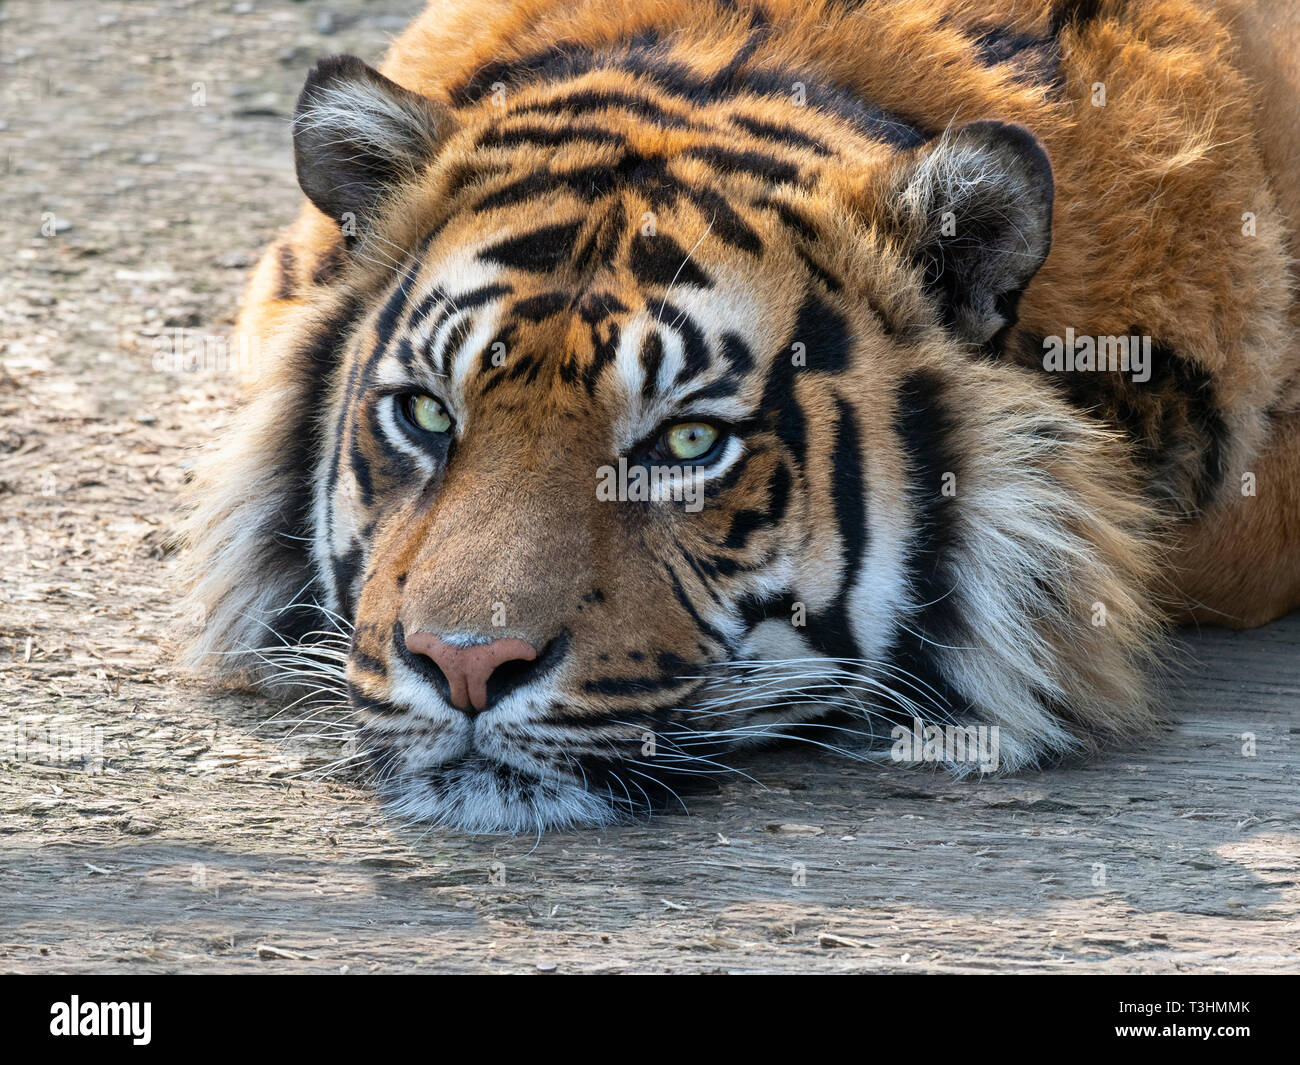 Tigre de Sumatra Panthera tigris sondaica cautivo Foto de stock